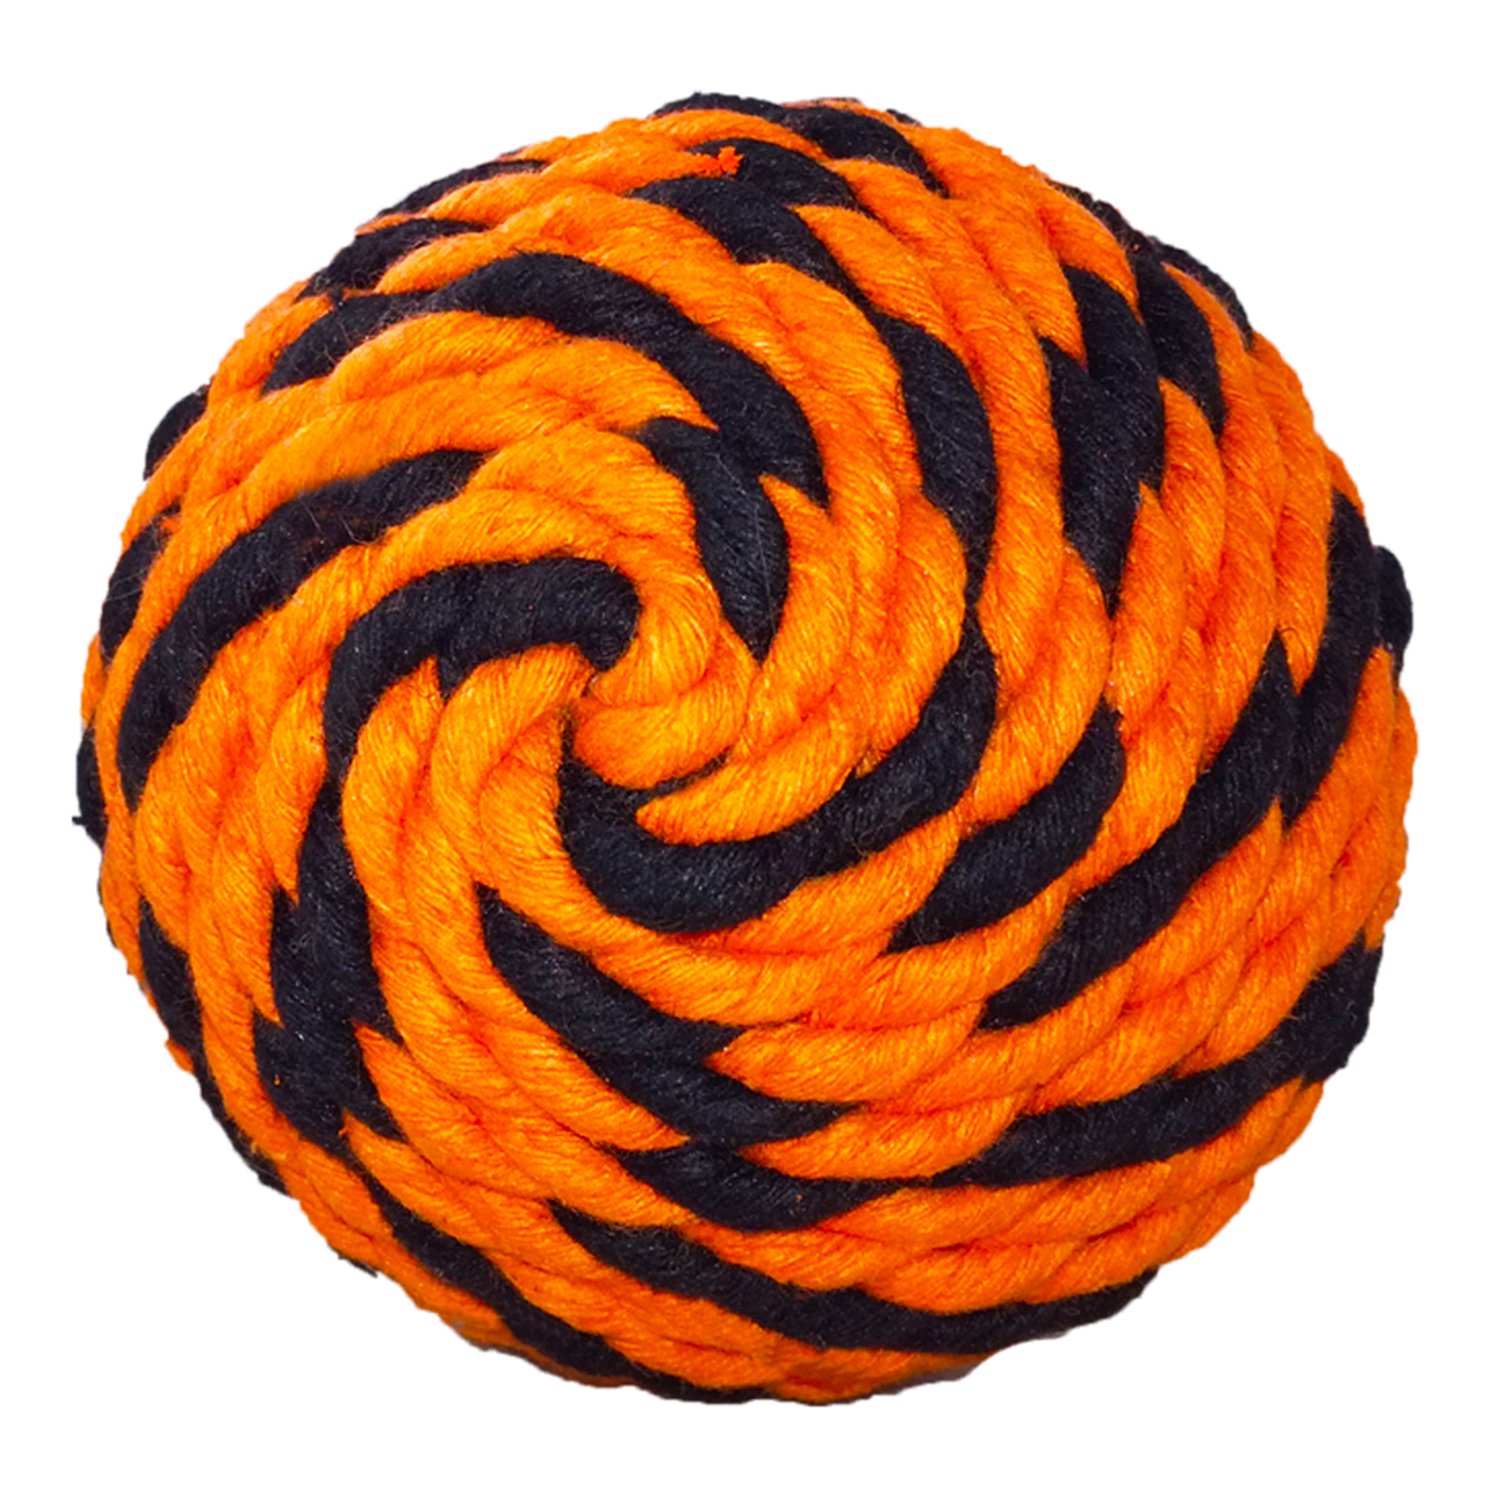 Мяч для собак Doglike Броник средний Оранжево-черный D-5326 - фото 1